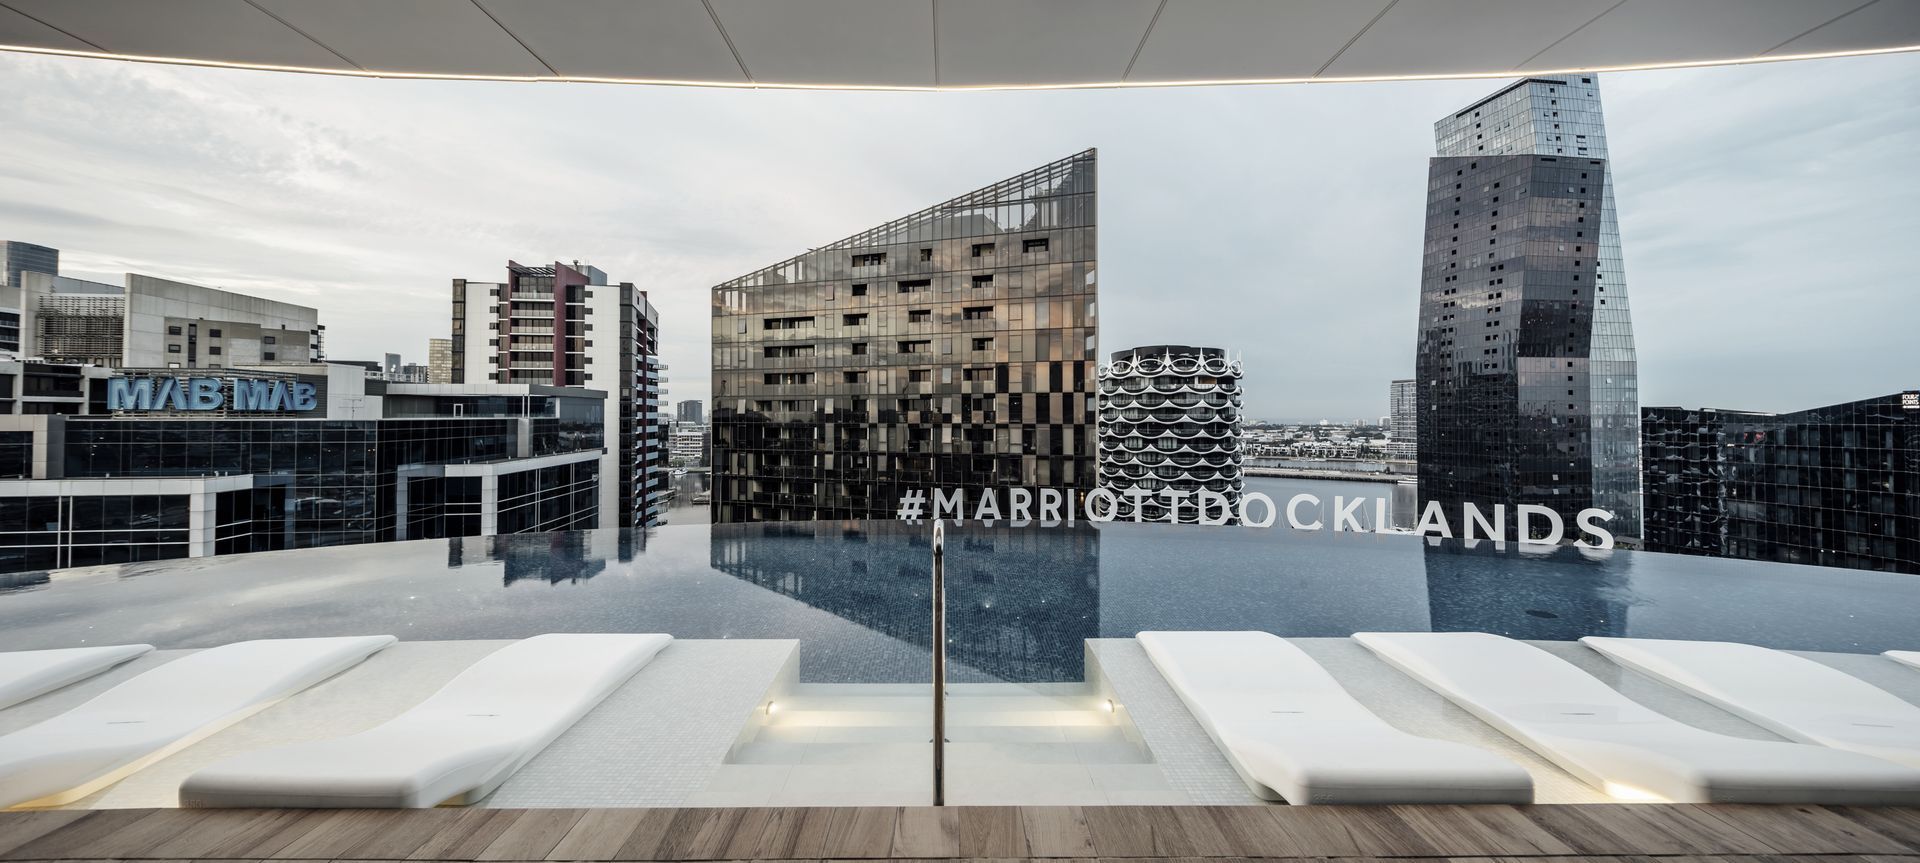 Marriot Docklands banner